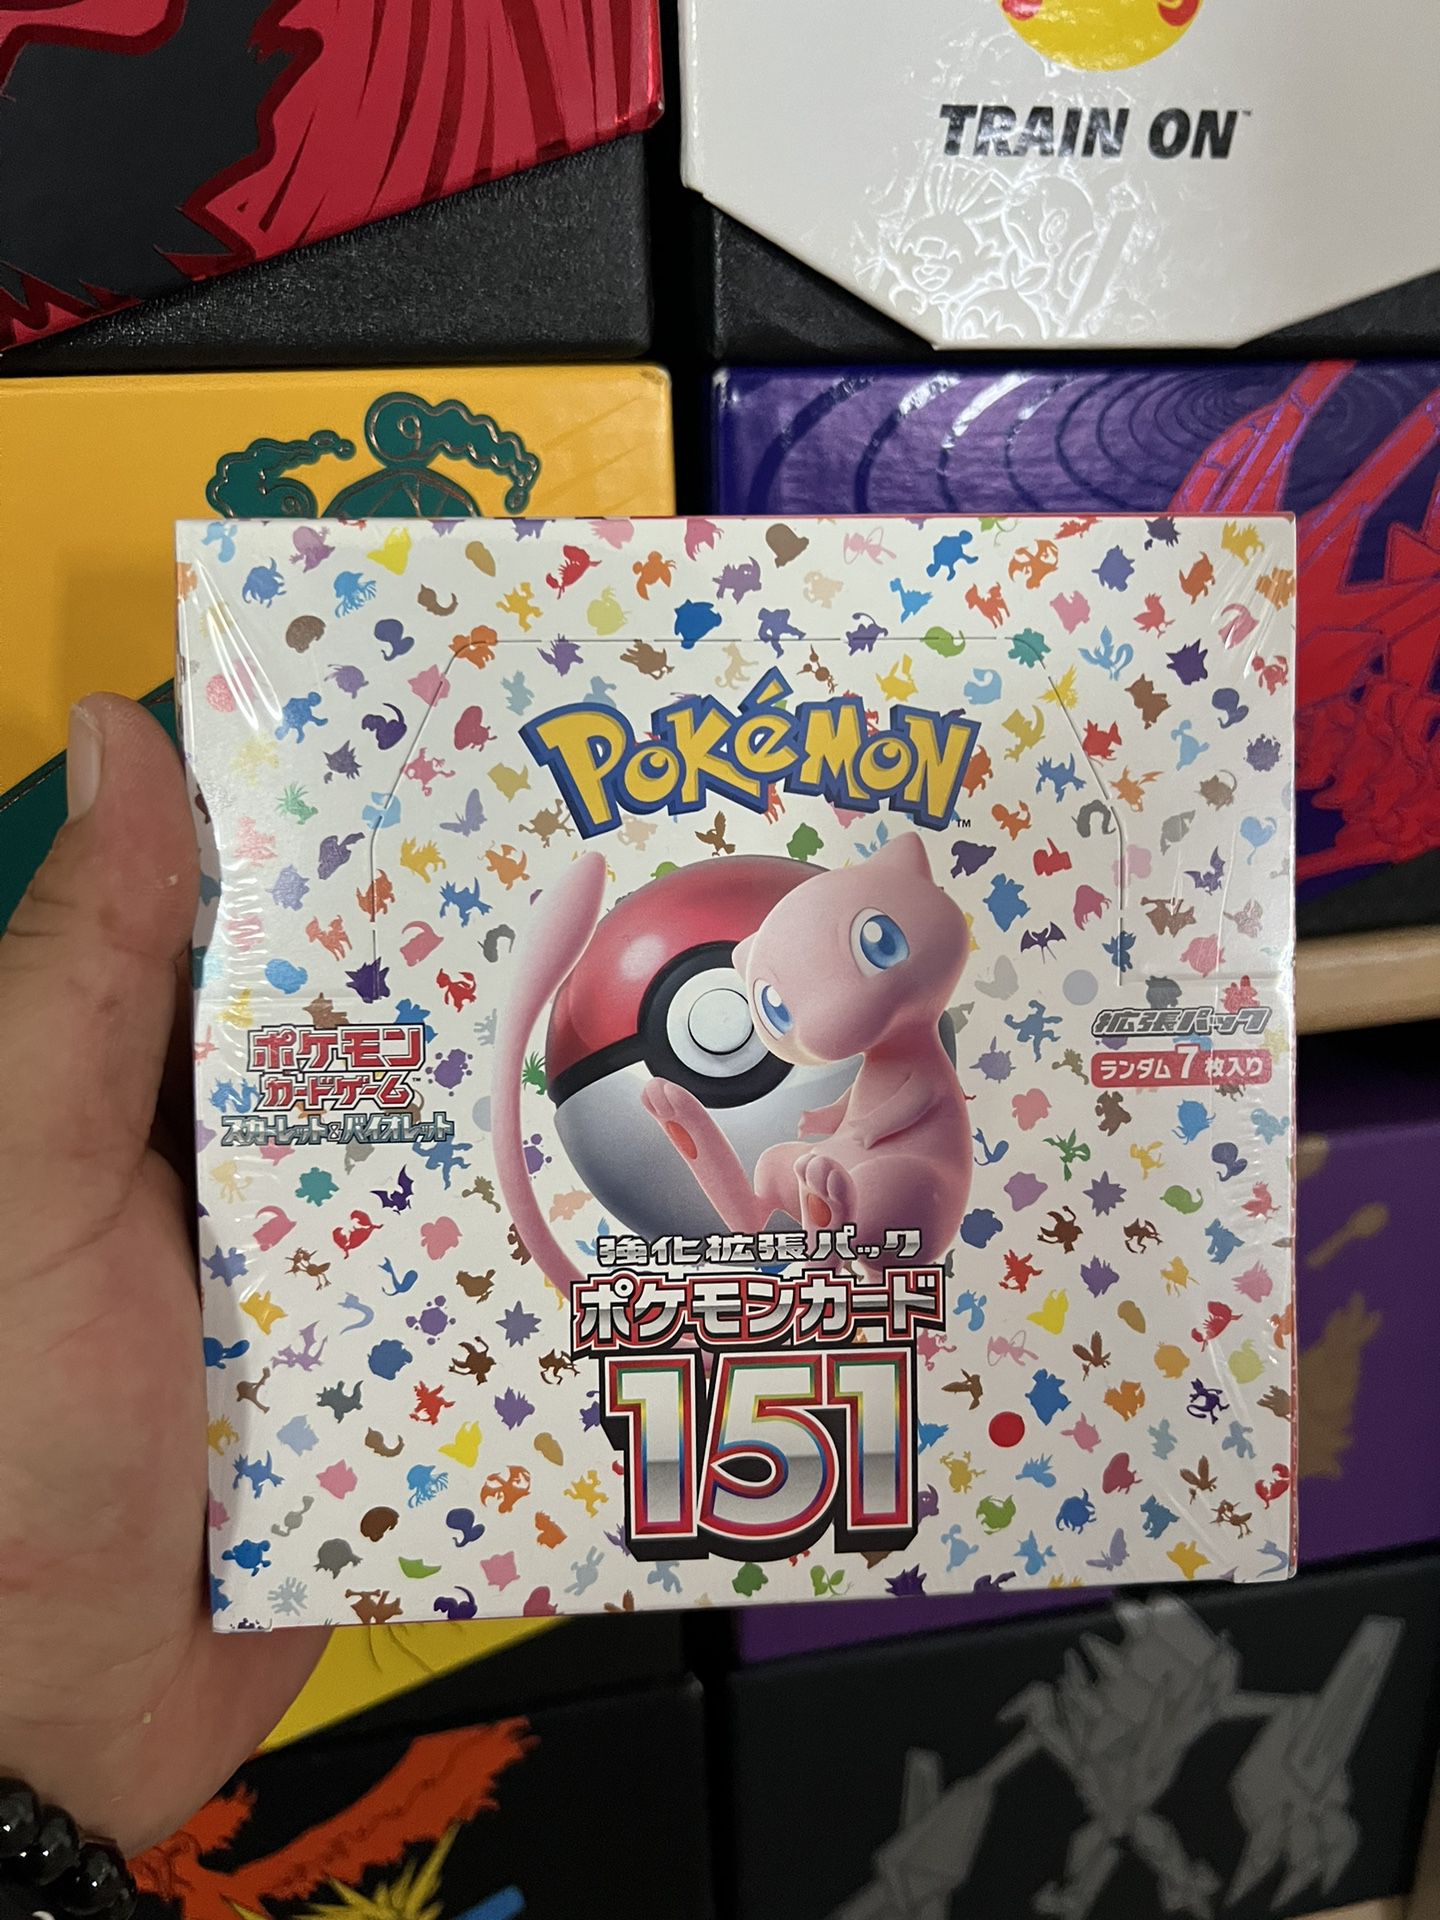 Pokémon Japanese 151 Booster Box